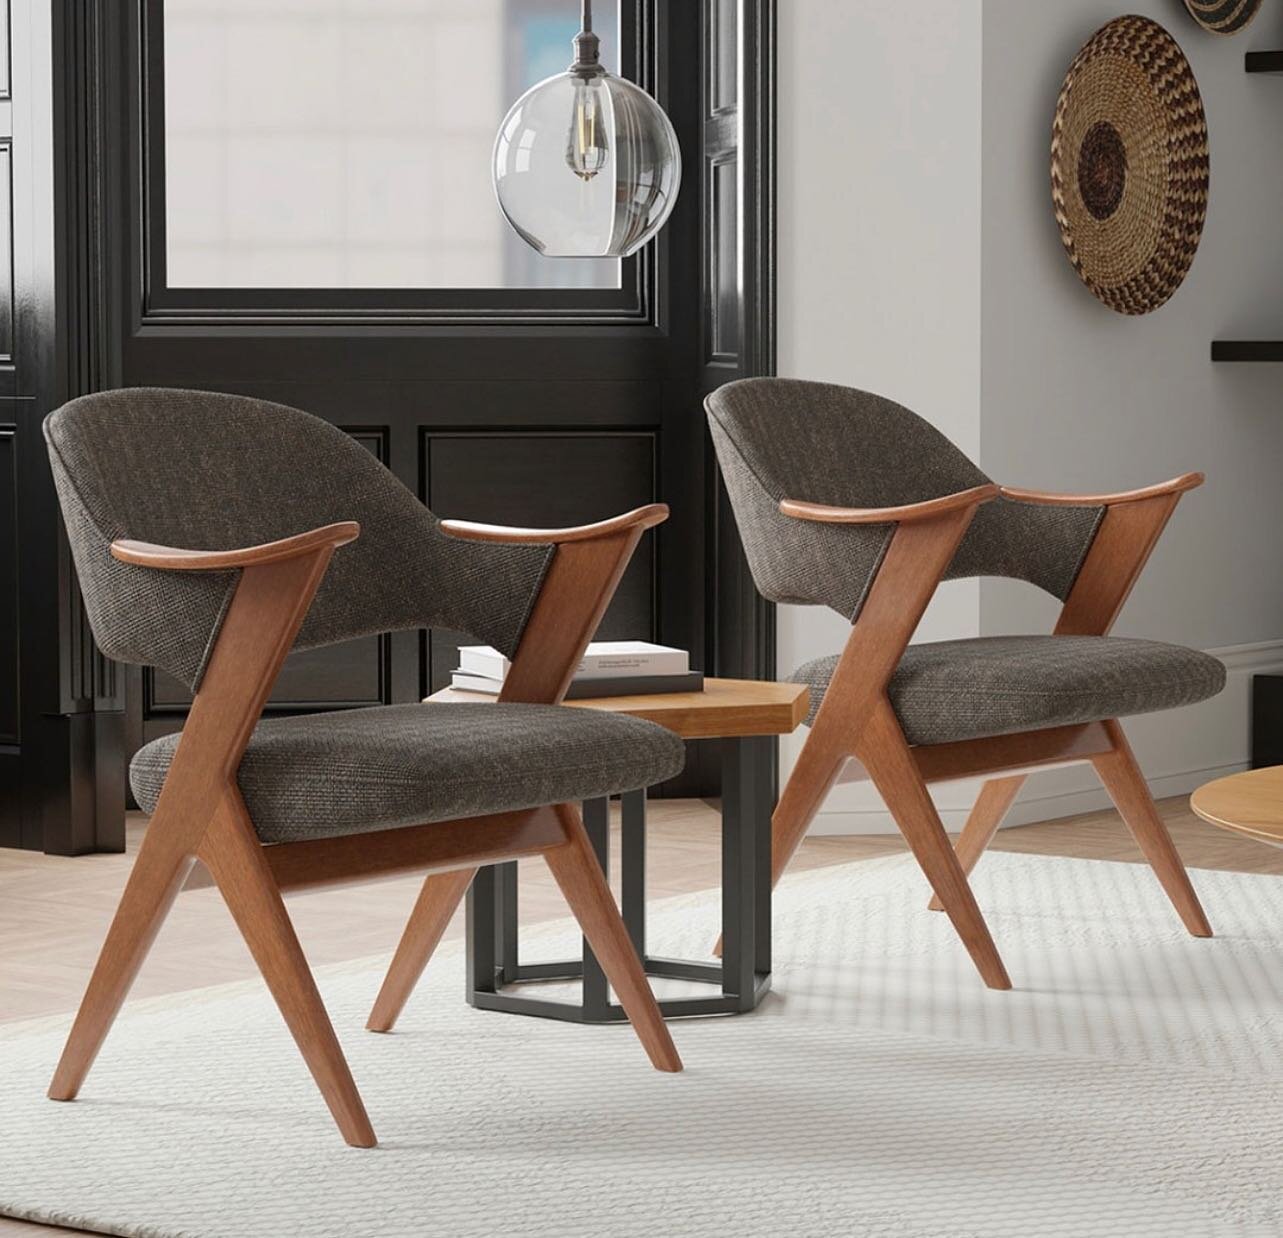 Take a seat and stay awhile with @fjordsfurniture 

#denver #colorado #decor #decorinspo #decorinspiration #furnituredesign #furnituredesigner #showroom #design #designshowroom #denverdesign #denverdesigndistrict #moderndesign #moderninterior #luxury